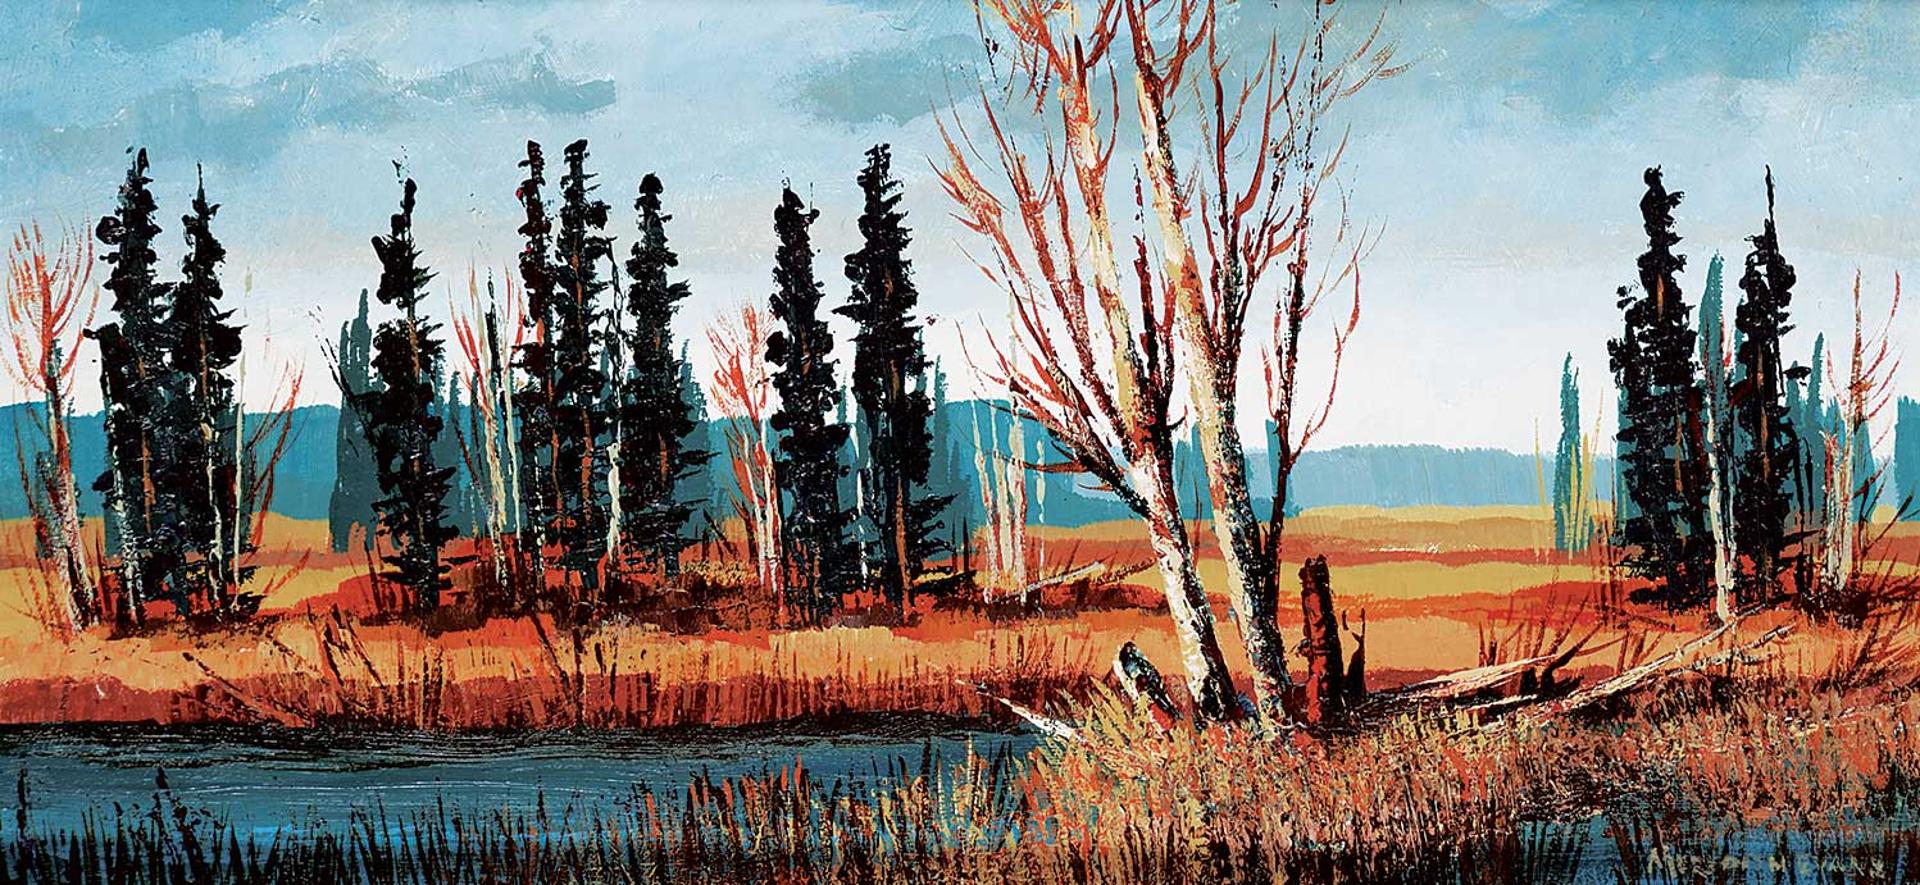 Meredith Evans (1919-1996) - 1 1/2 Miles North of Wandering River - North of Edmonton